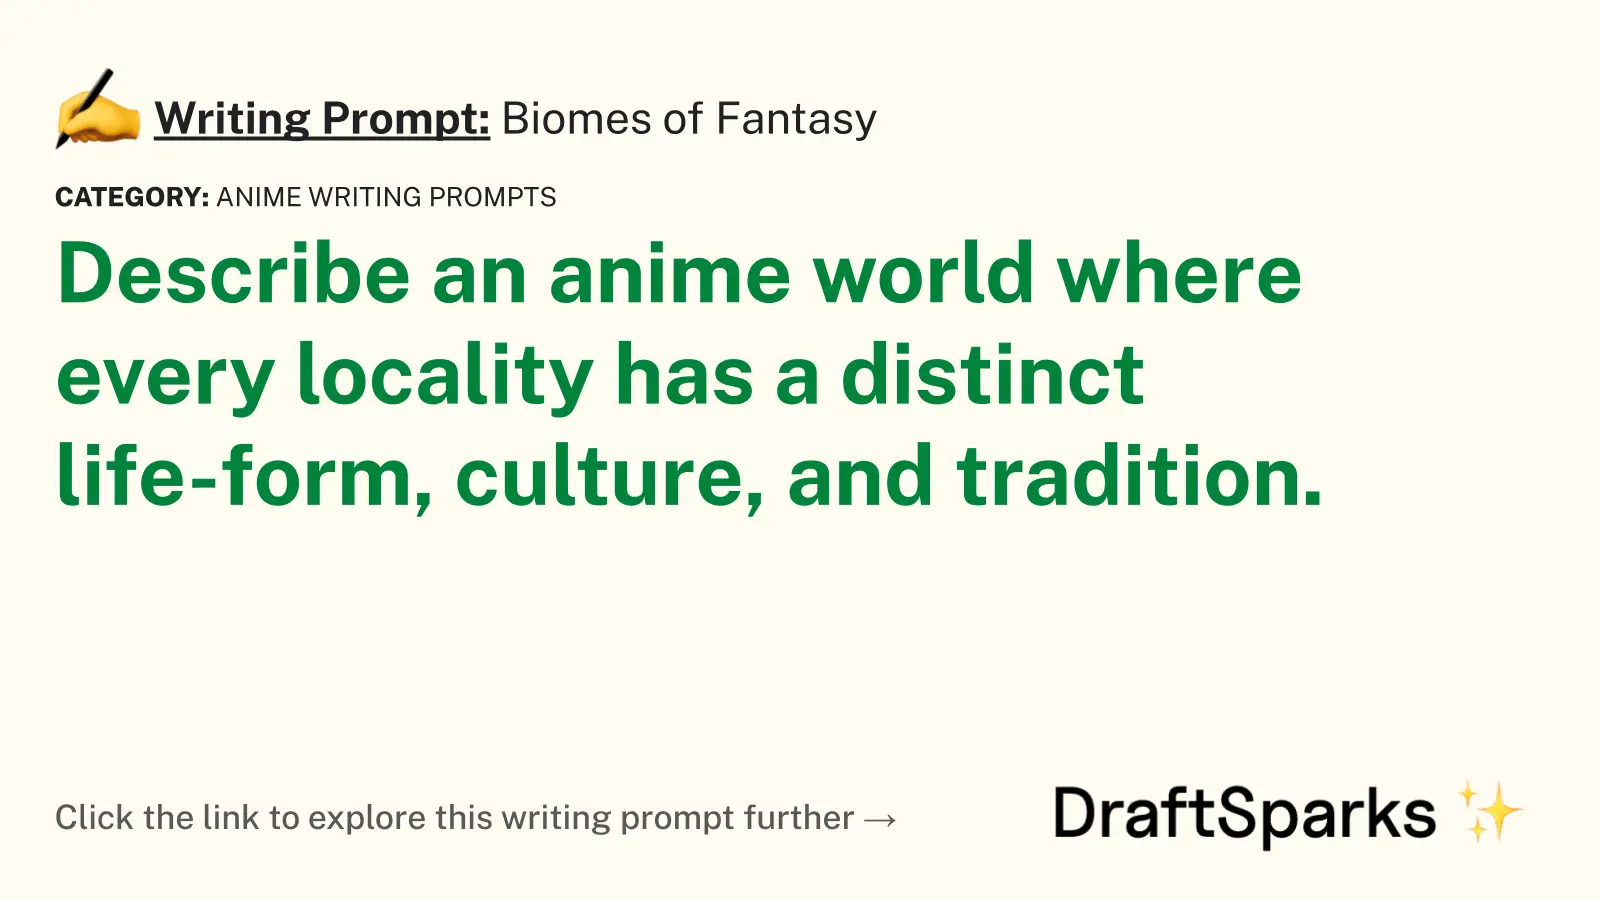 Biomes of Fantasy